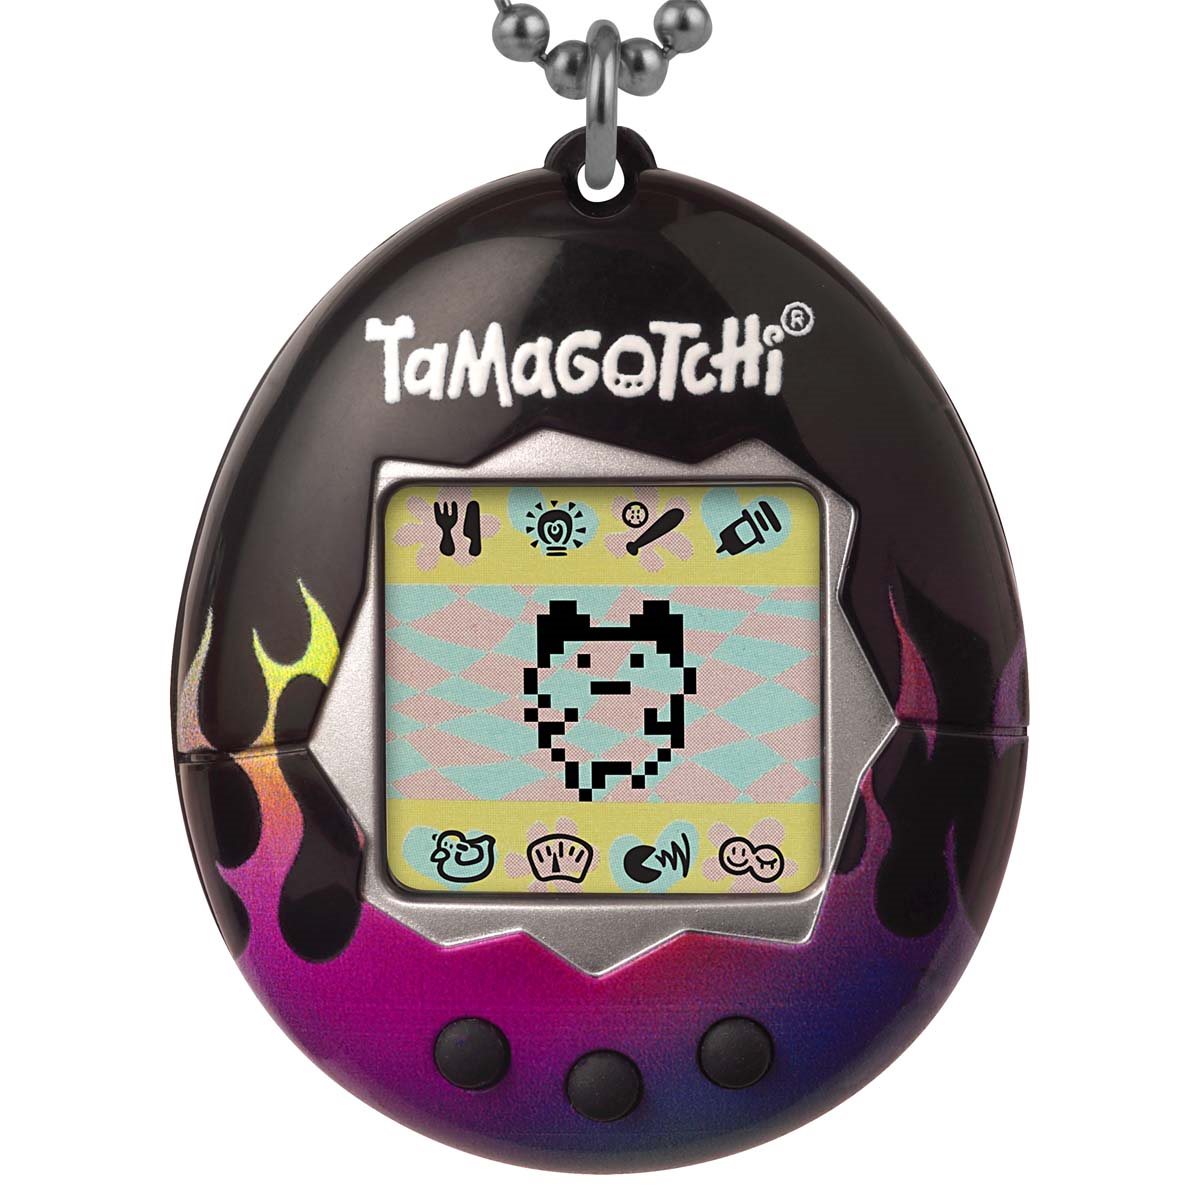 Tamagotchi: Original Tamagotchi - Kuchipatchi (Comic book Ver.)